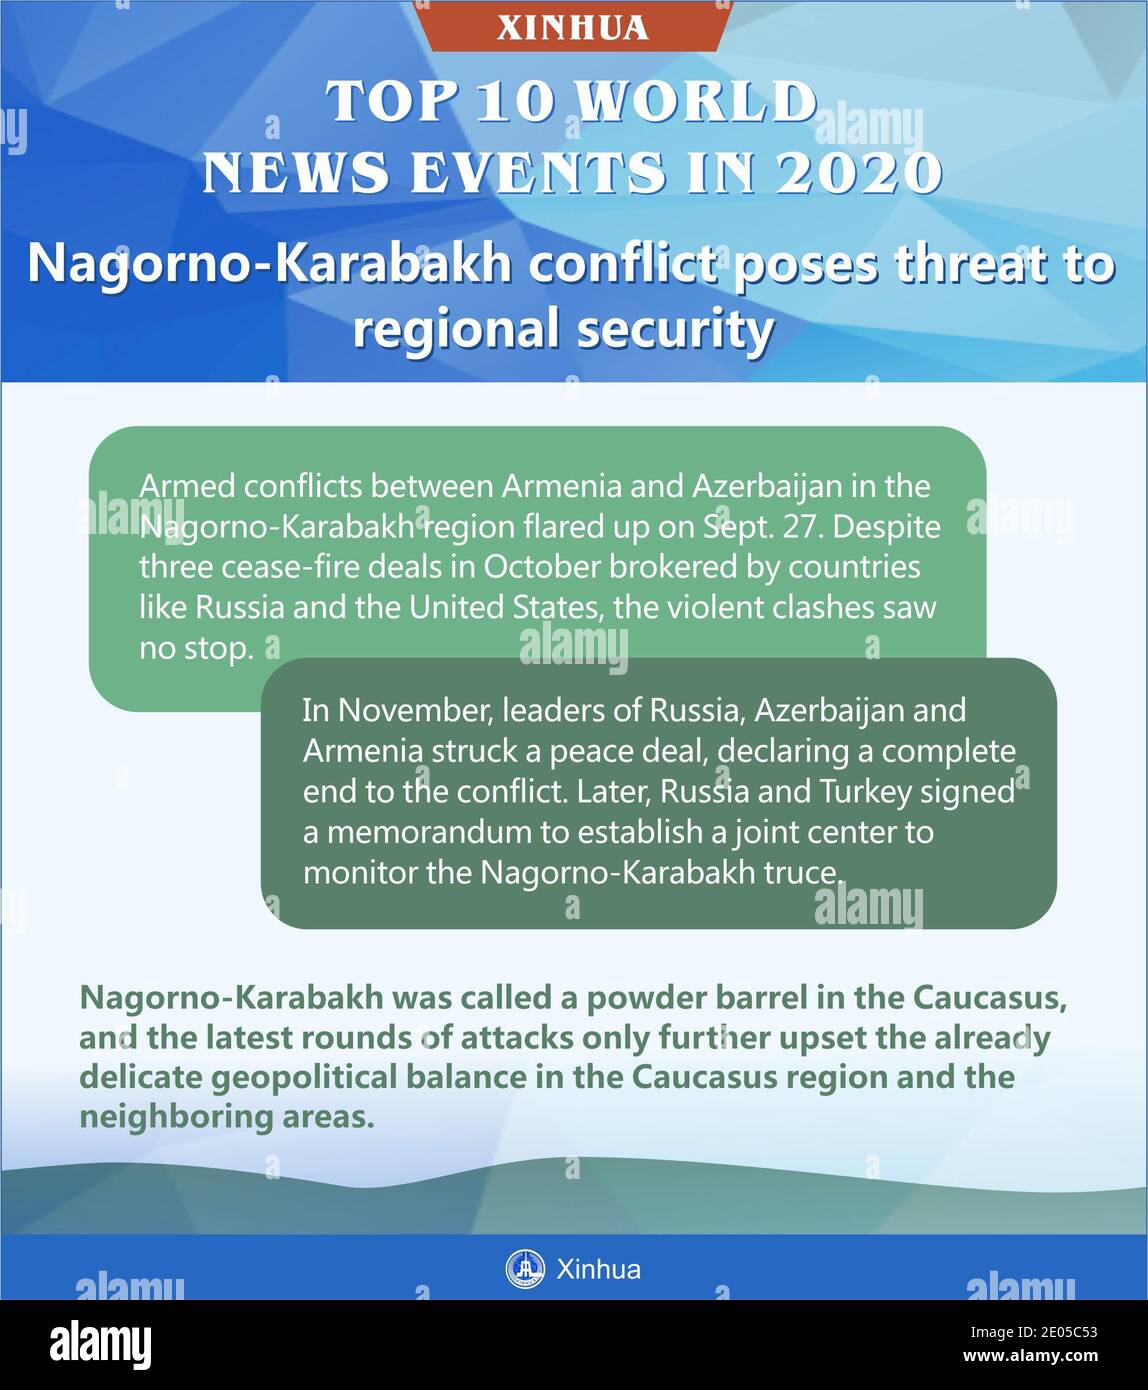 Beijing, China. 30th Dec, 2020. Nagorno-Karabakh conflict poses threat to regional security Credit: Shi Manke/Xinhua/Alamy Live News Stock Photo